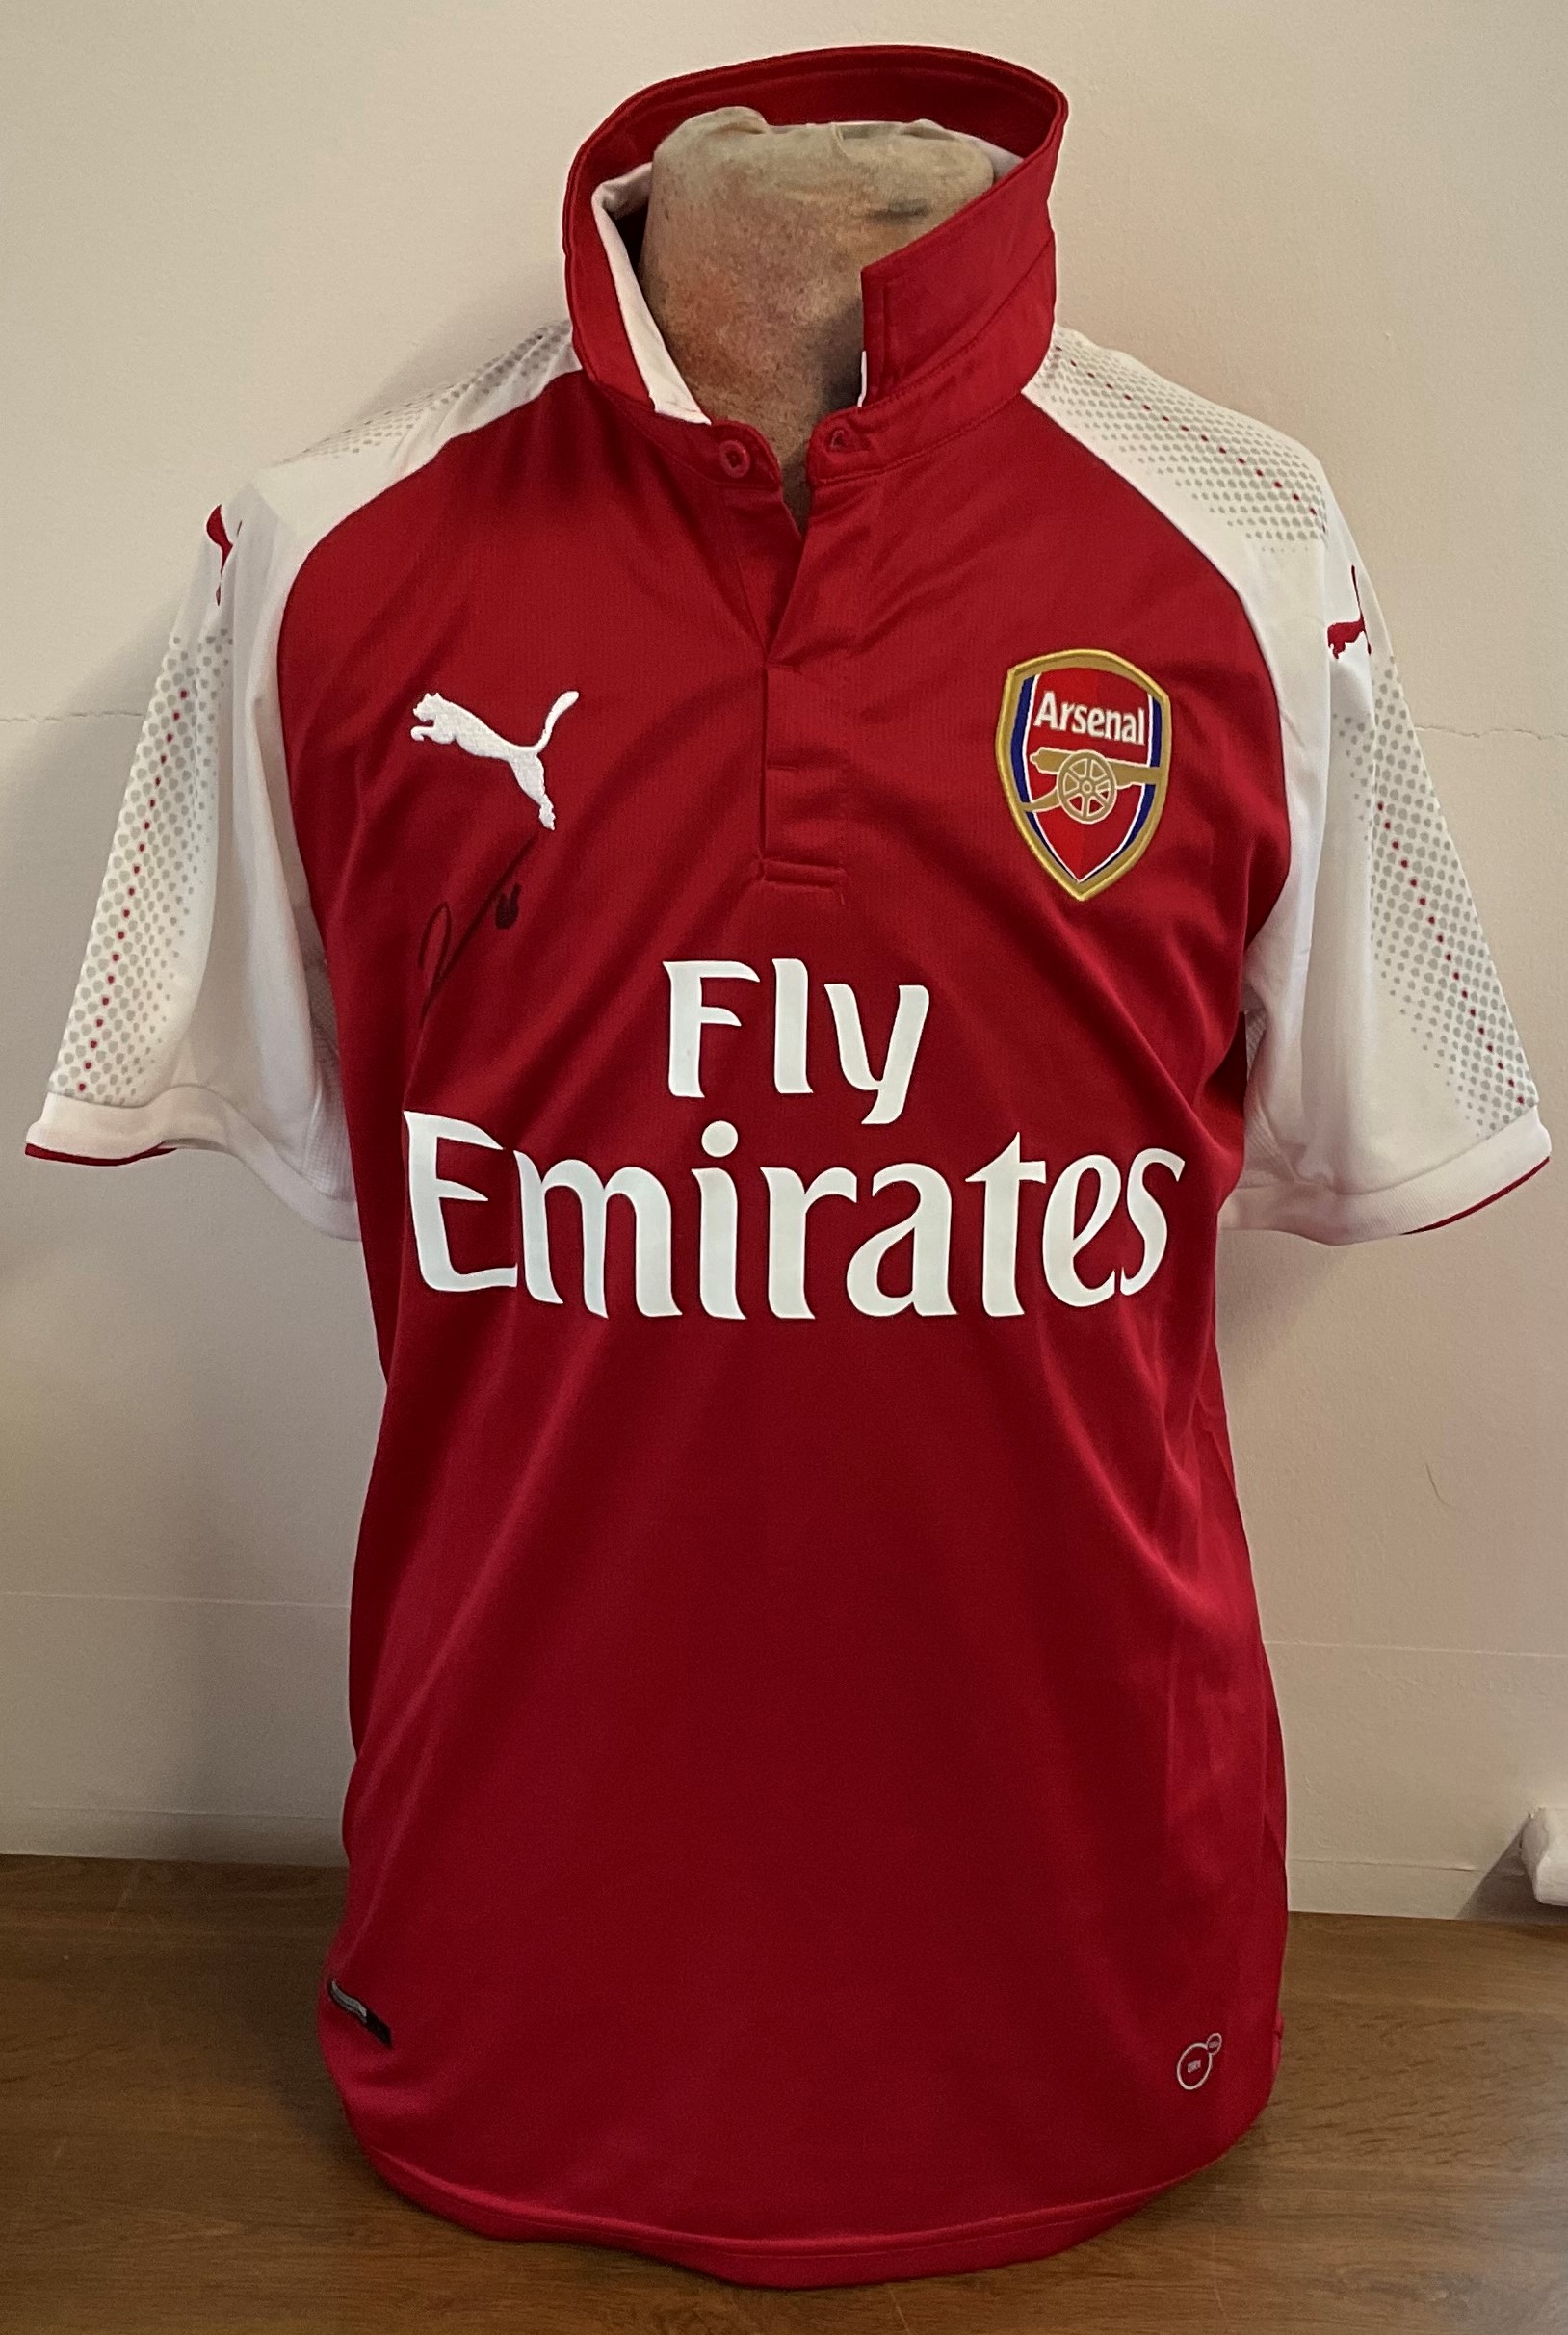 Football Pierre-Emerick Aubameyang signed Arsenal replica home shirt.